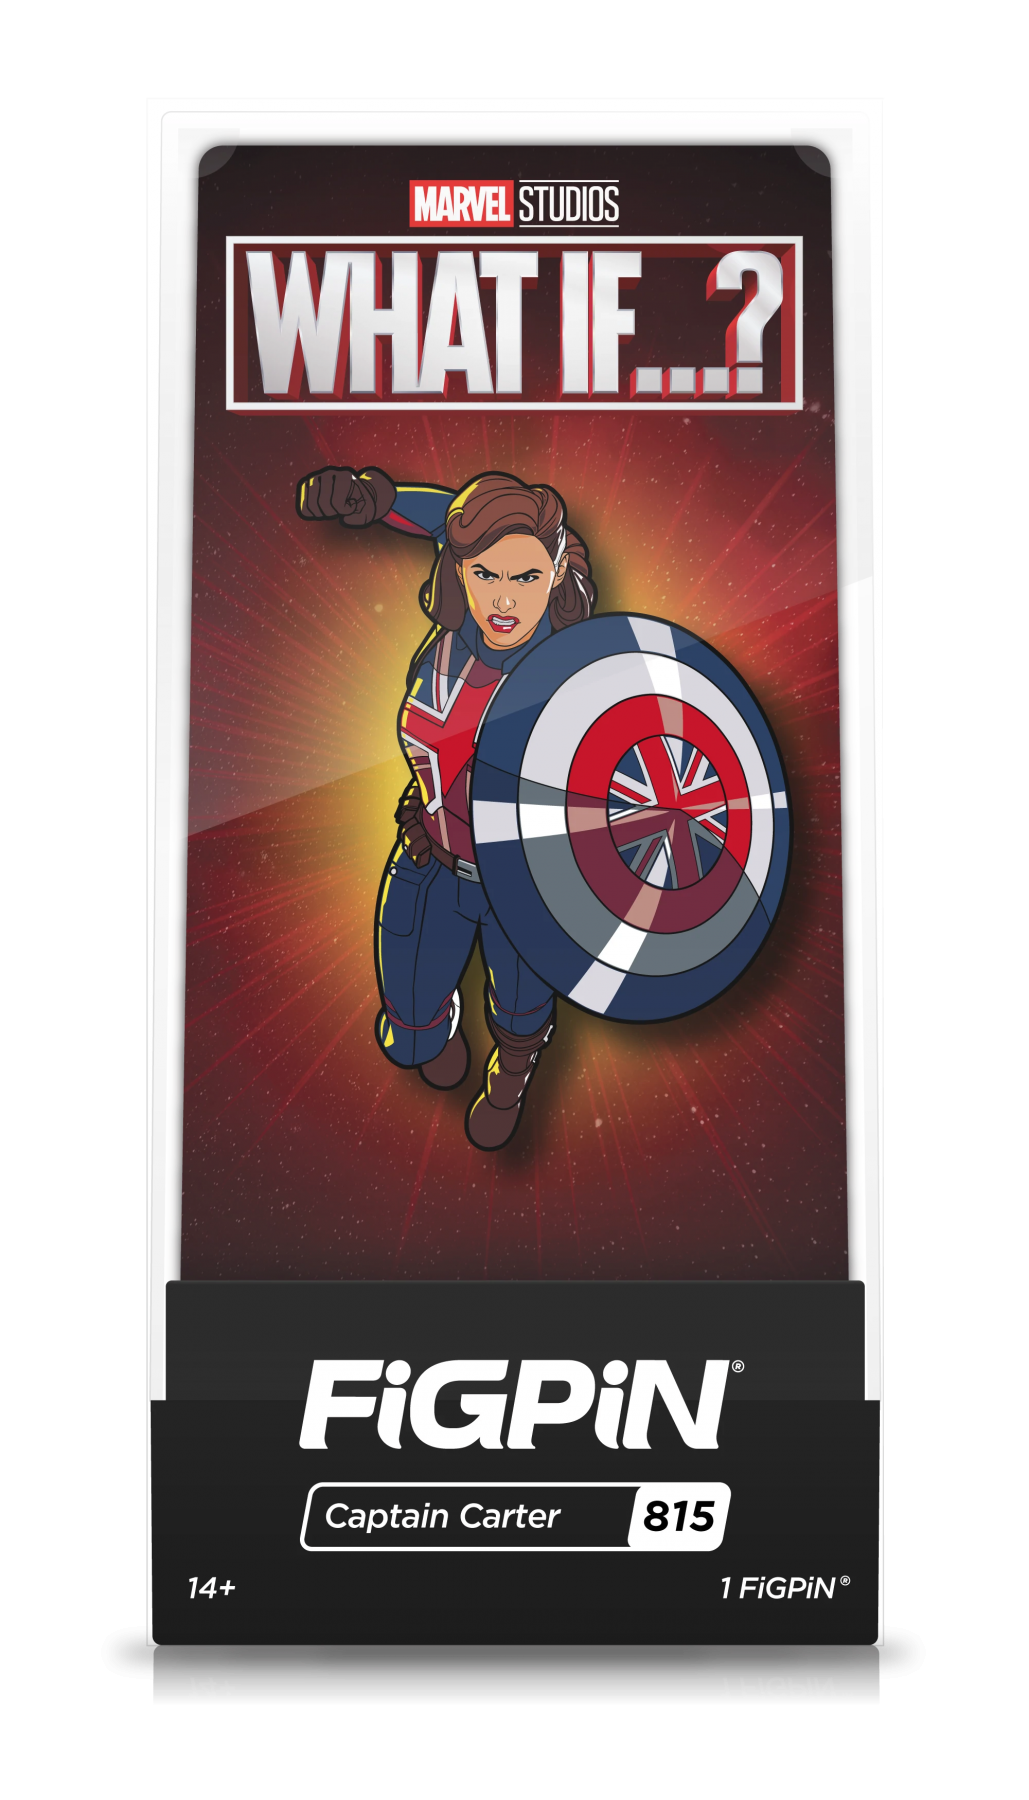 FiGPiN Captain Carter (815) Collectable Enamel Pin MKJARZEFIE |28280|